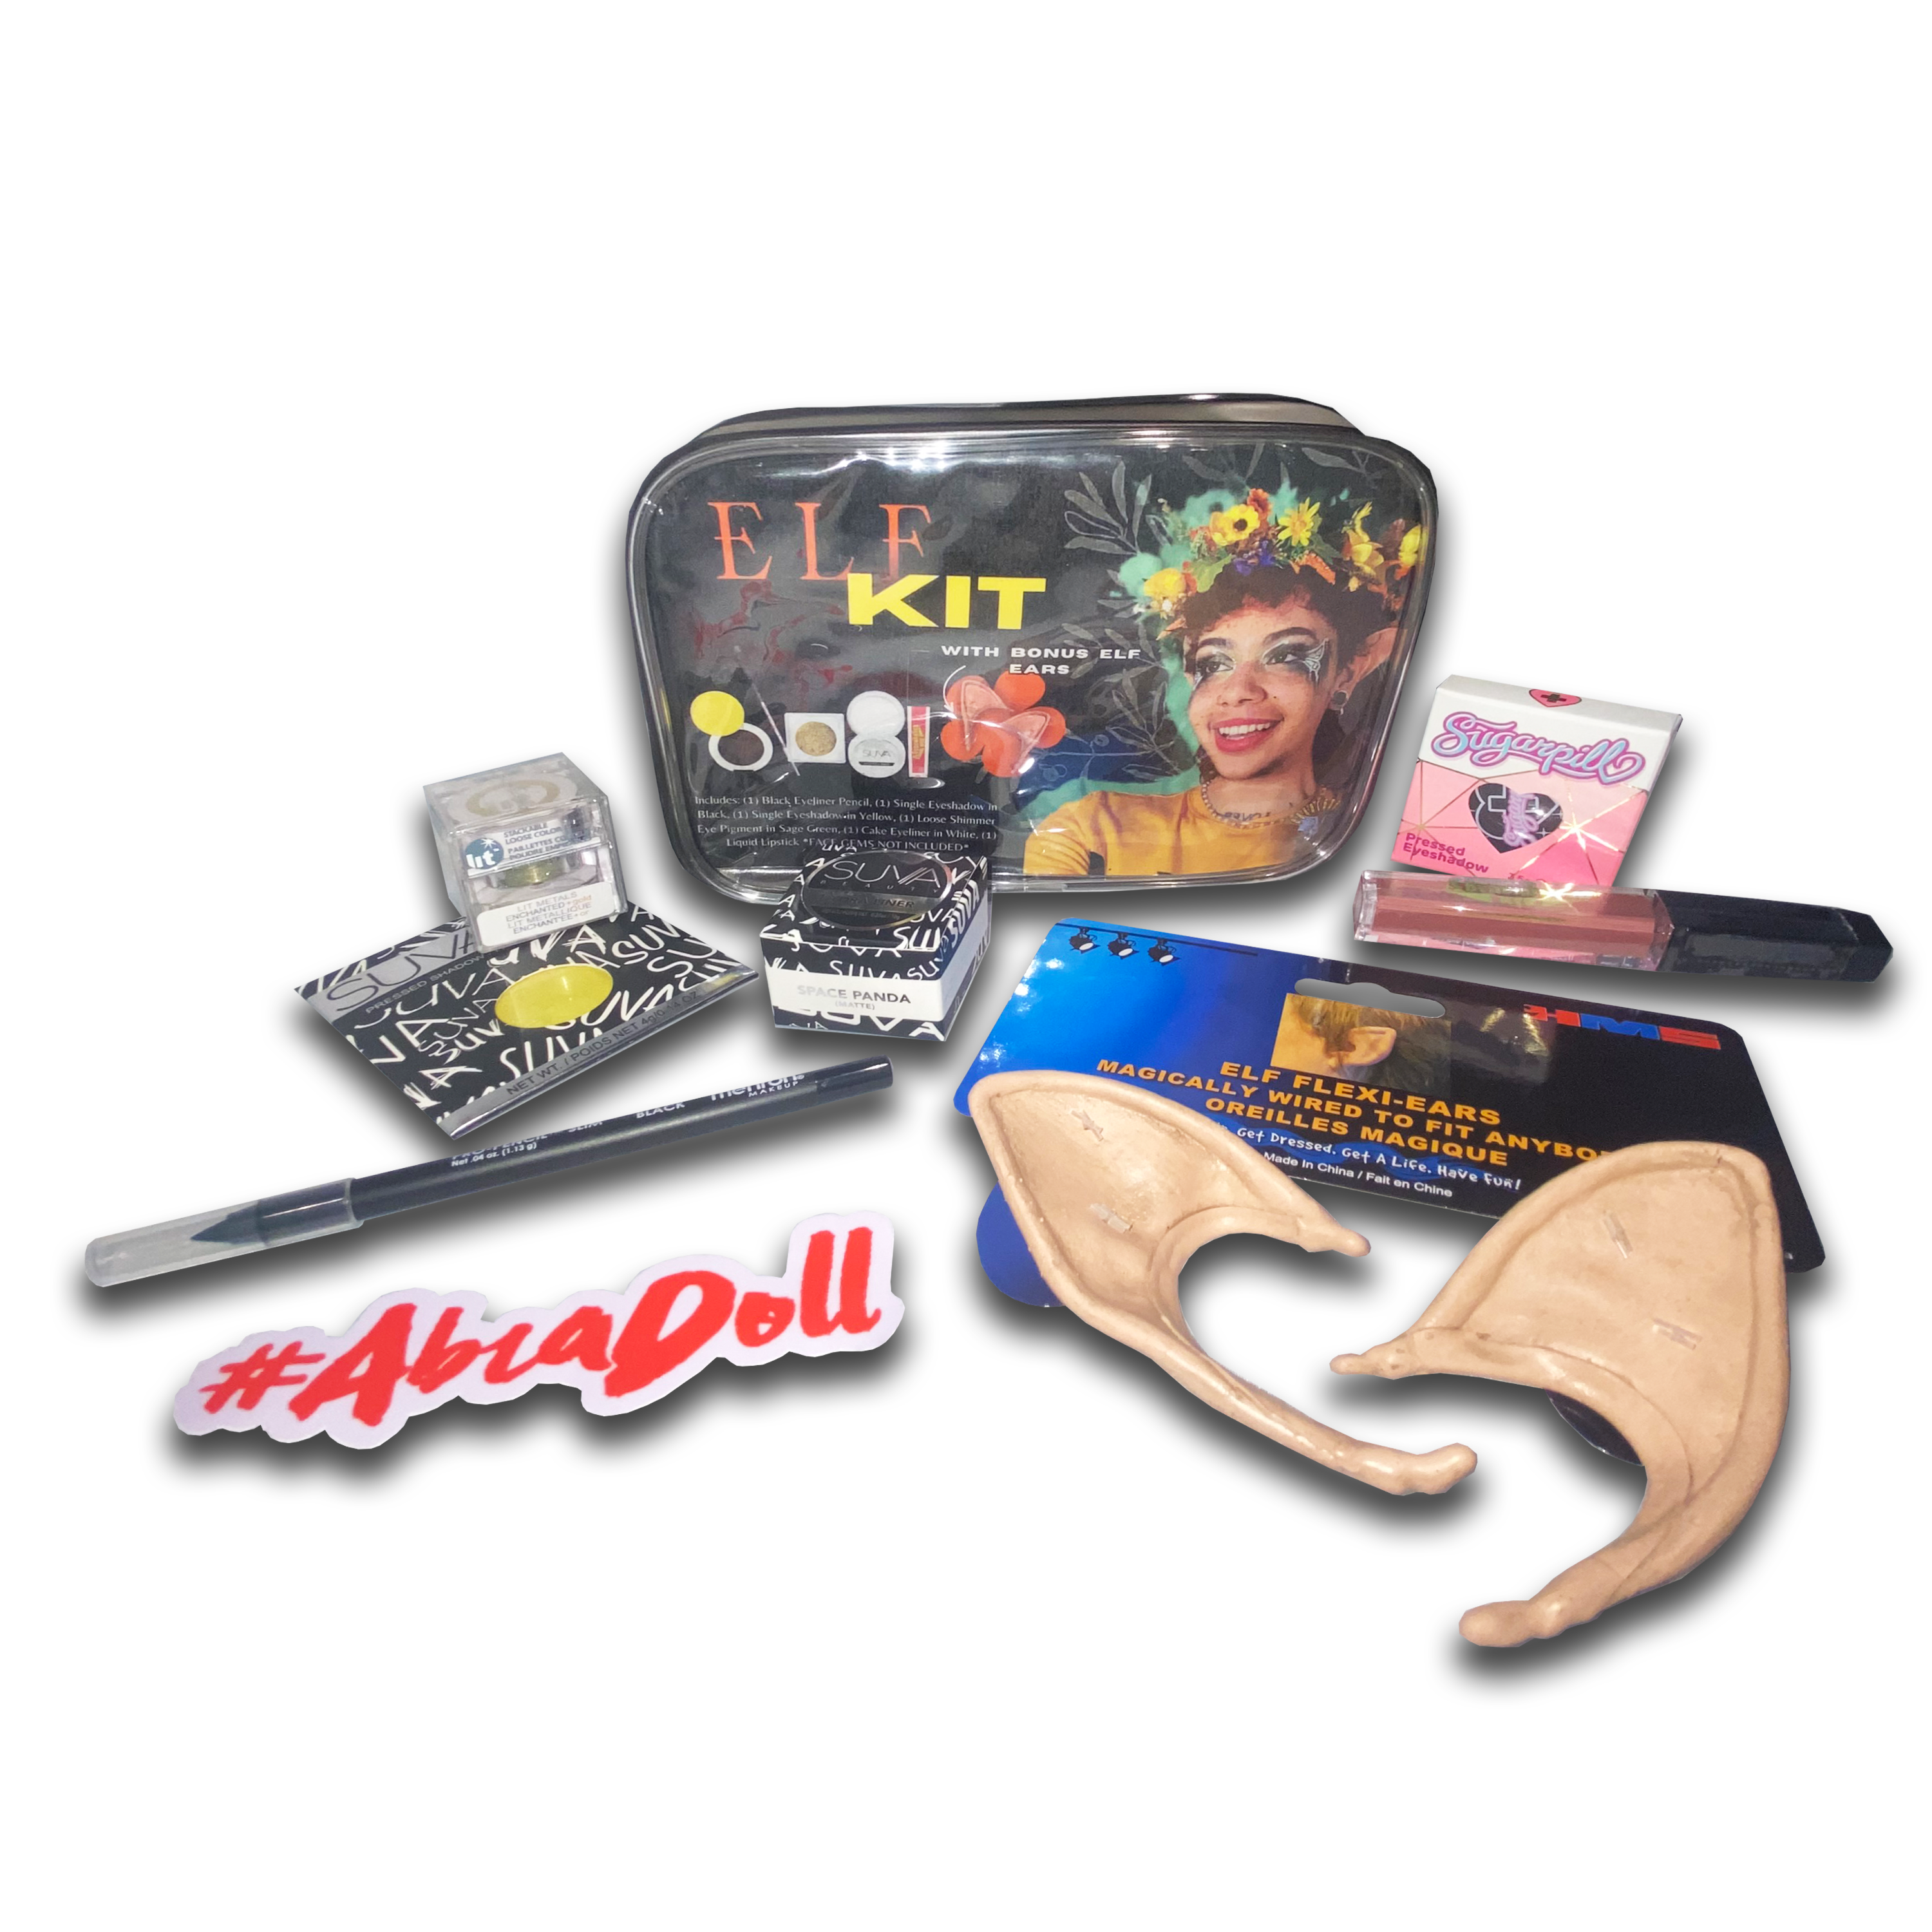 Professional FX Makeup Kits